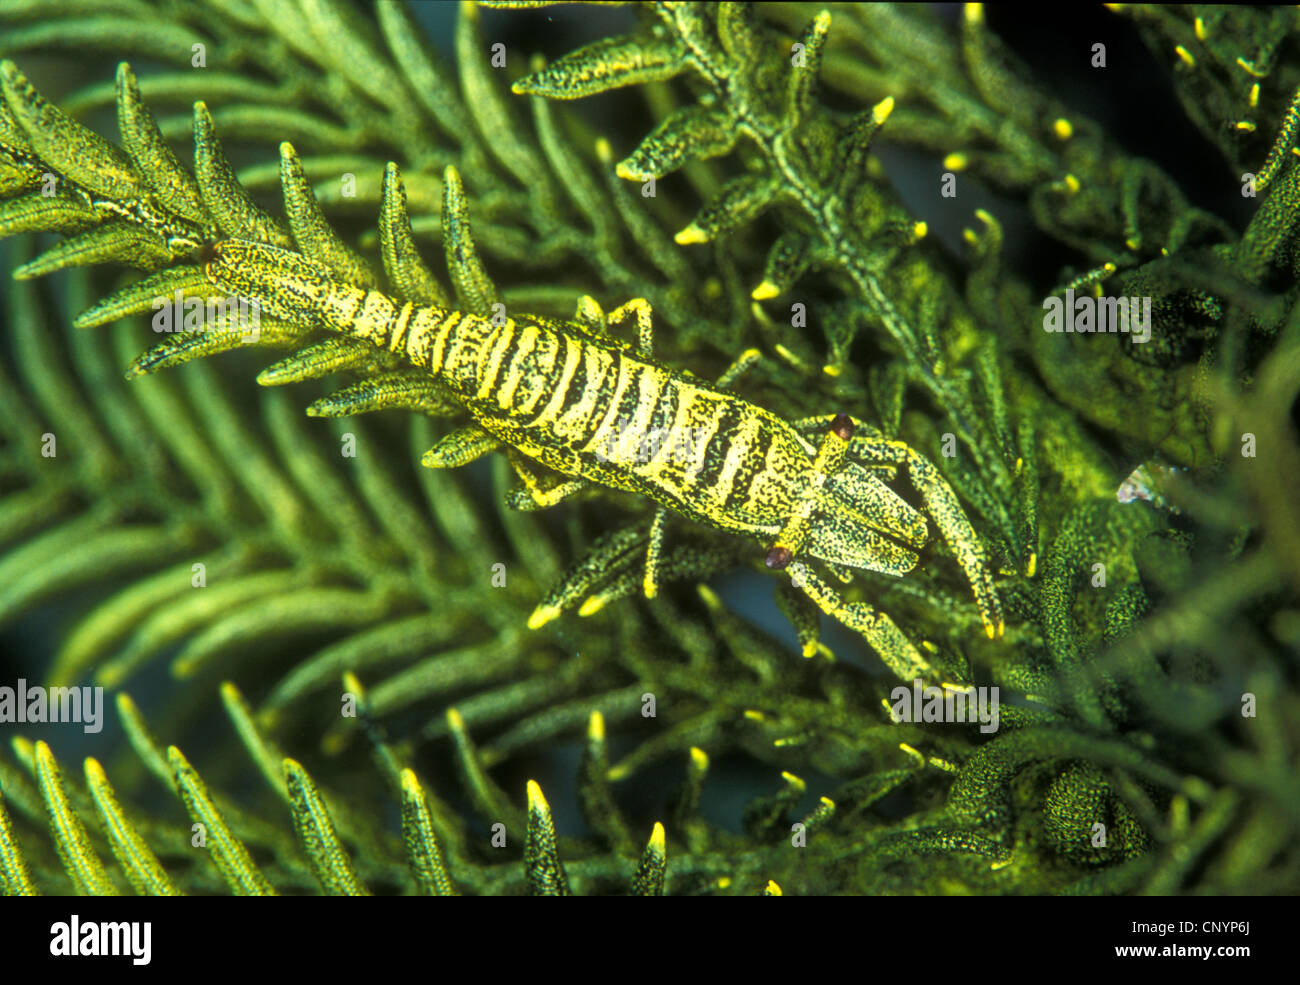 a crinoid shrimp in its matching crinoid Stock Photo